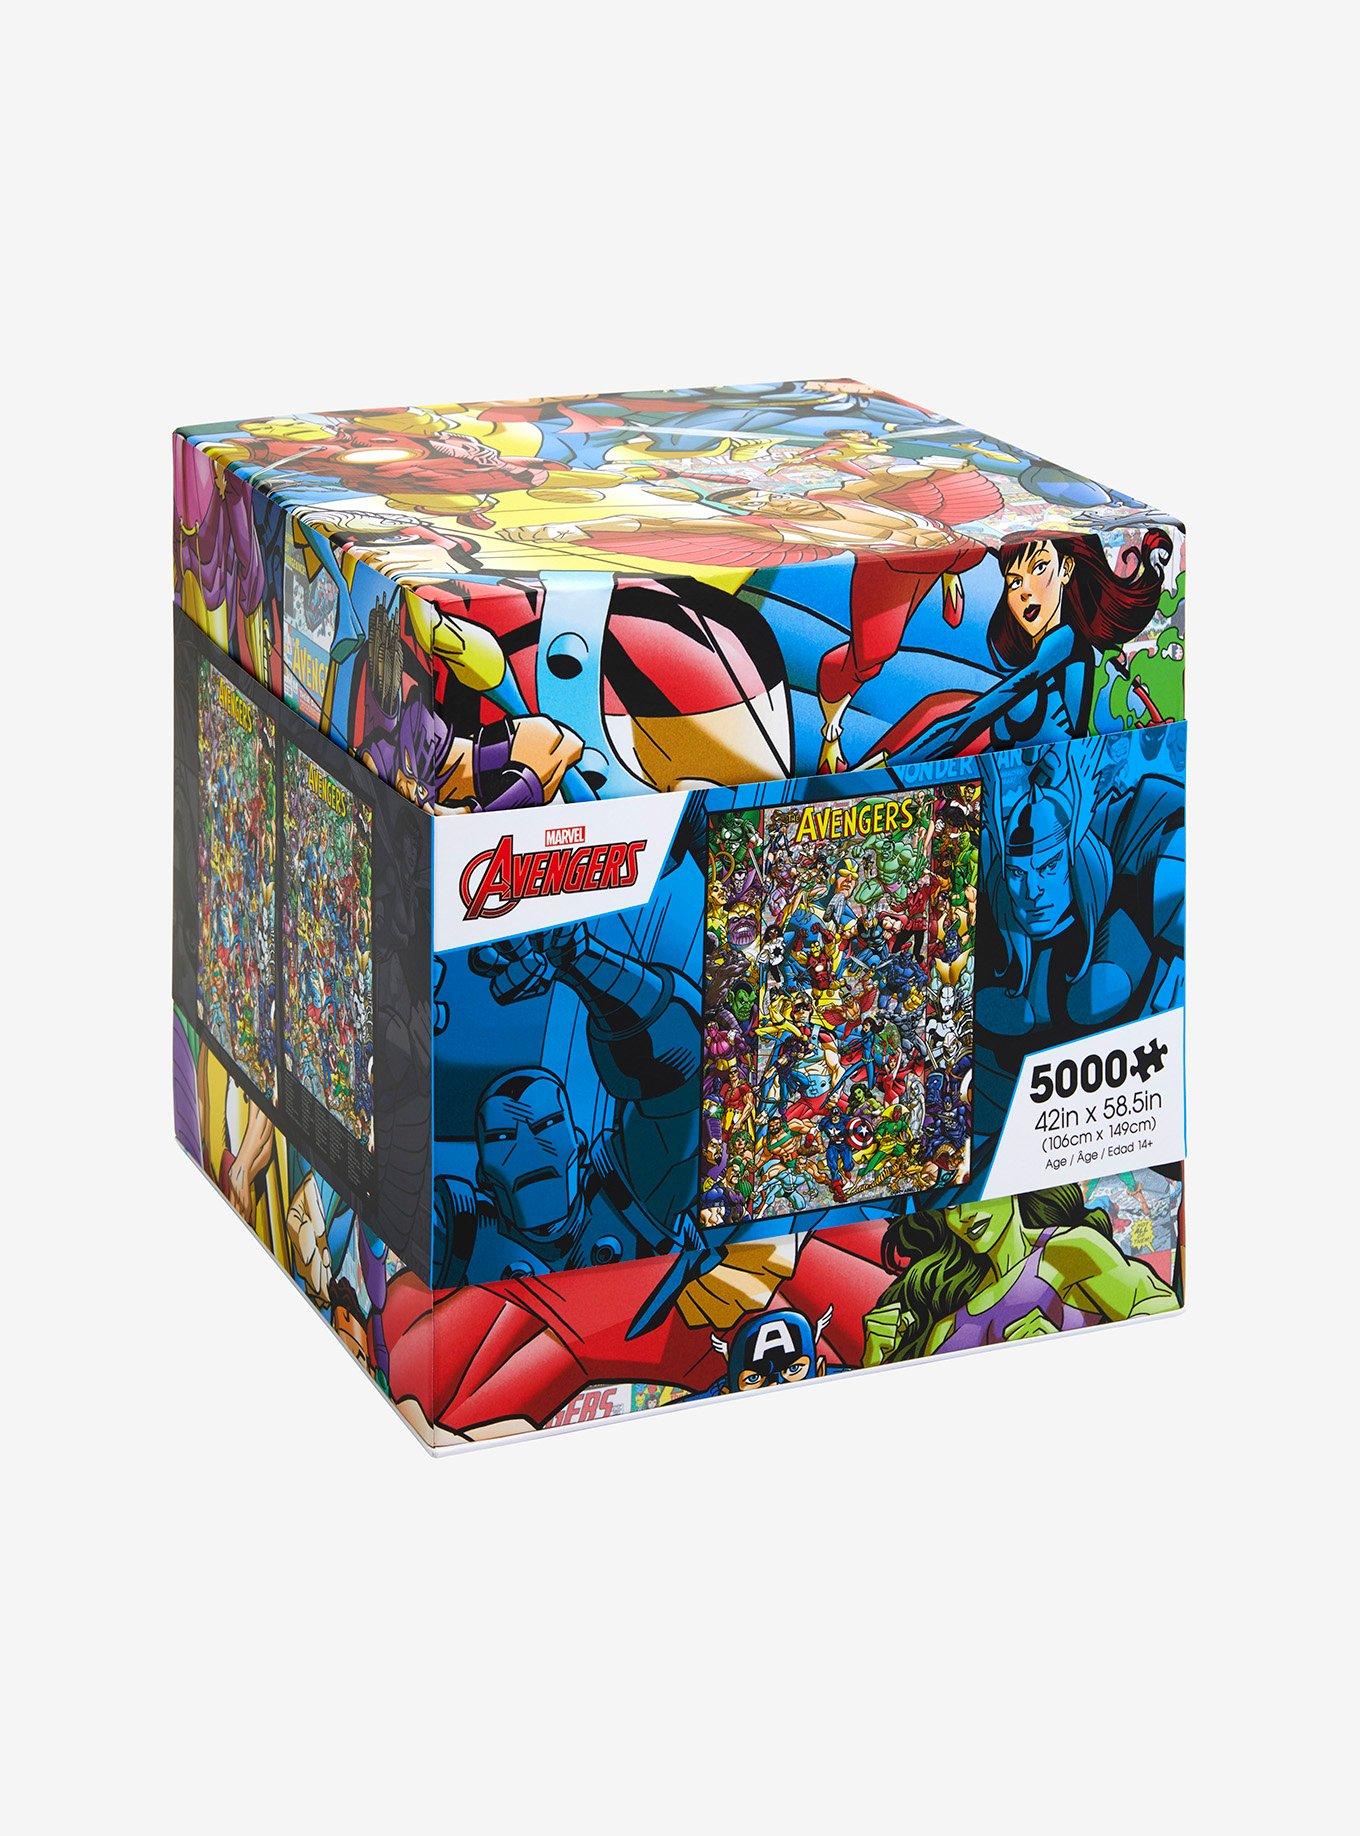 Puzzle Giant collection: Avengers, 120 pieces